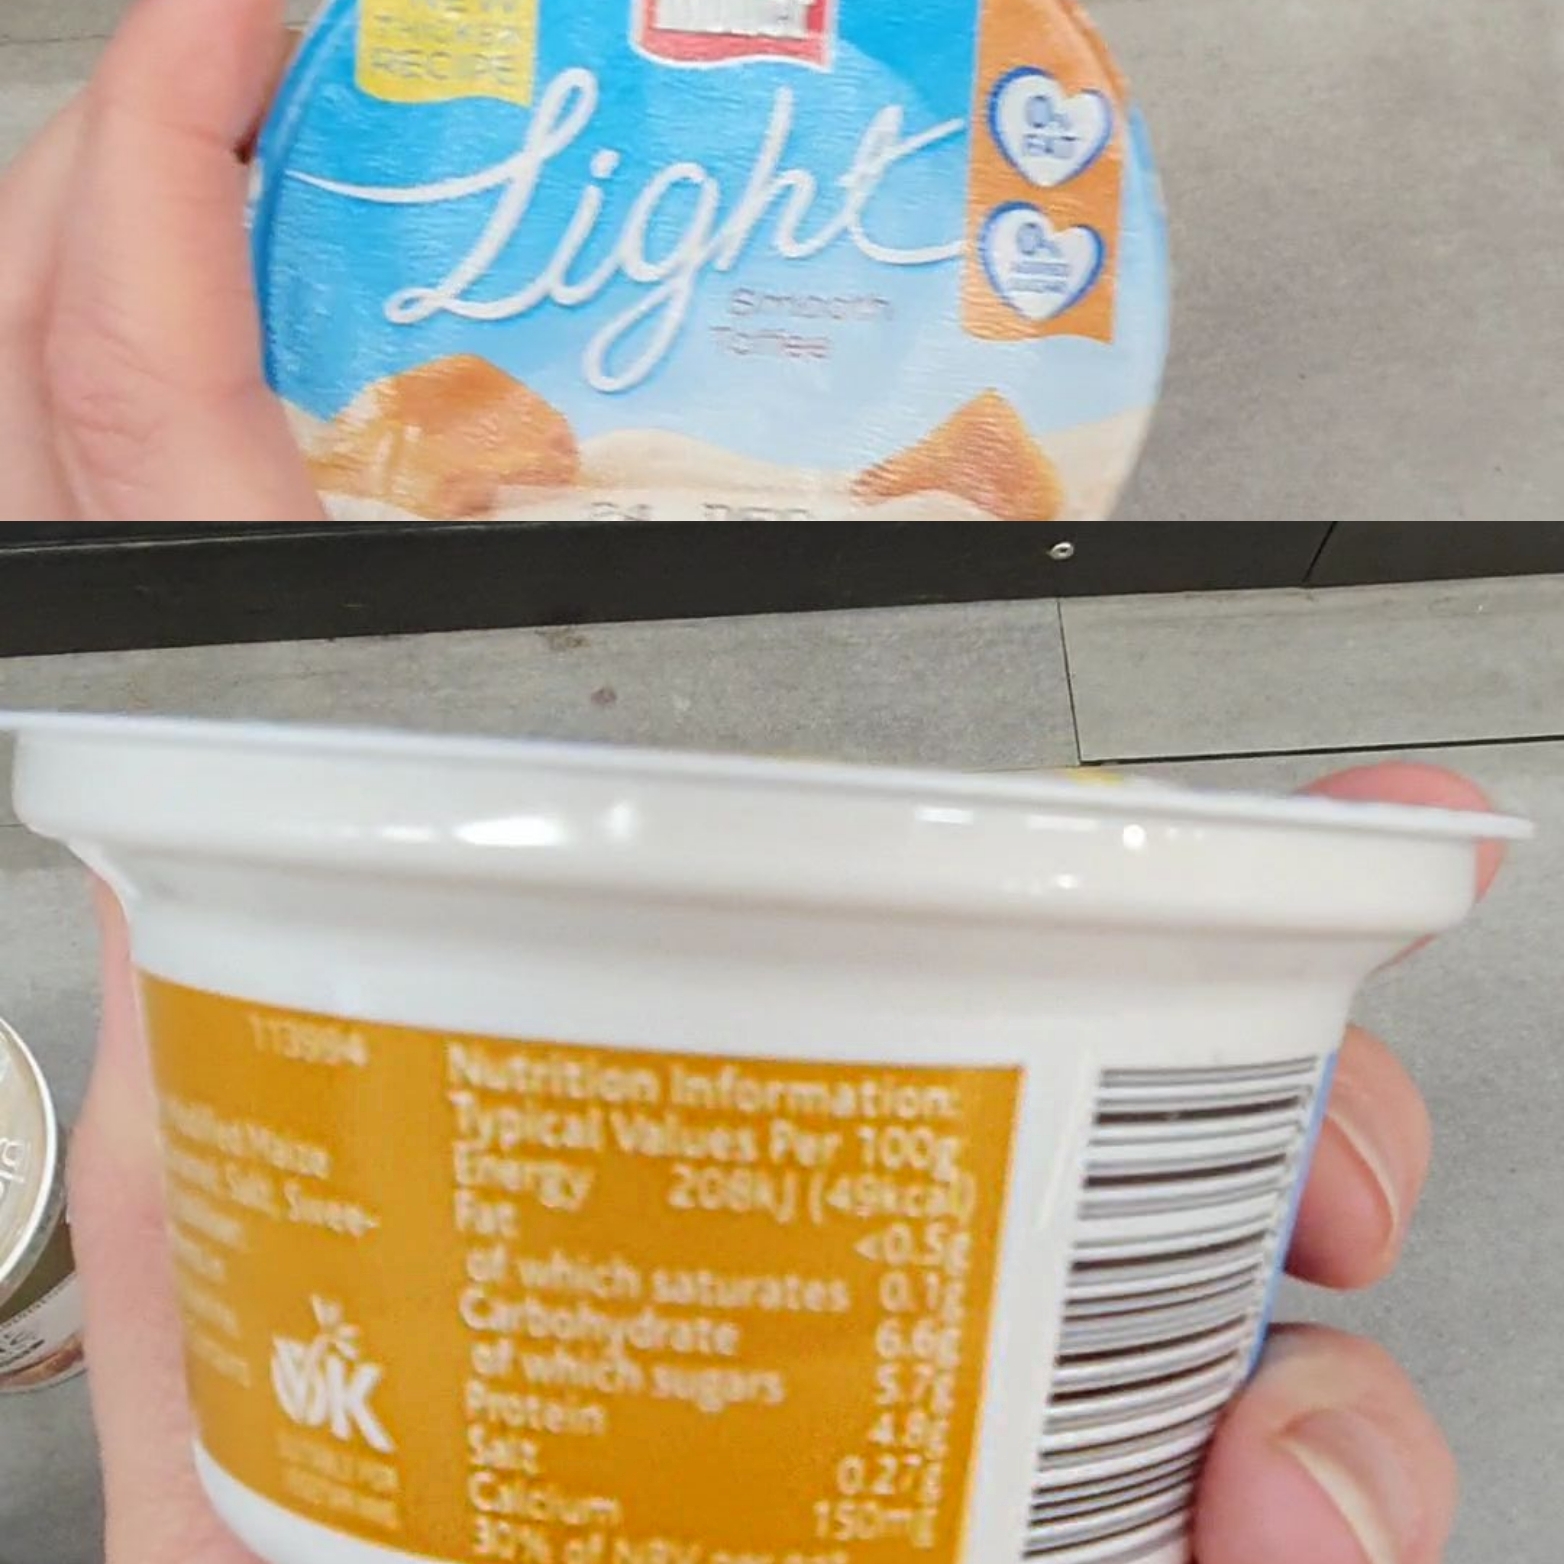 This yoghurt uses pectin